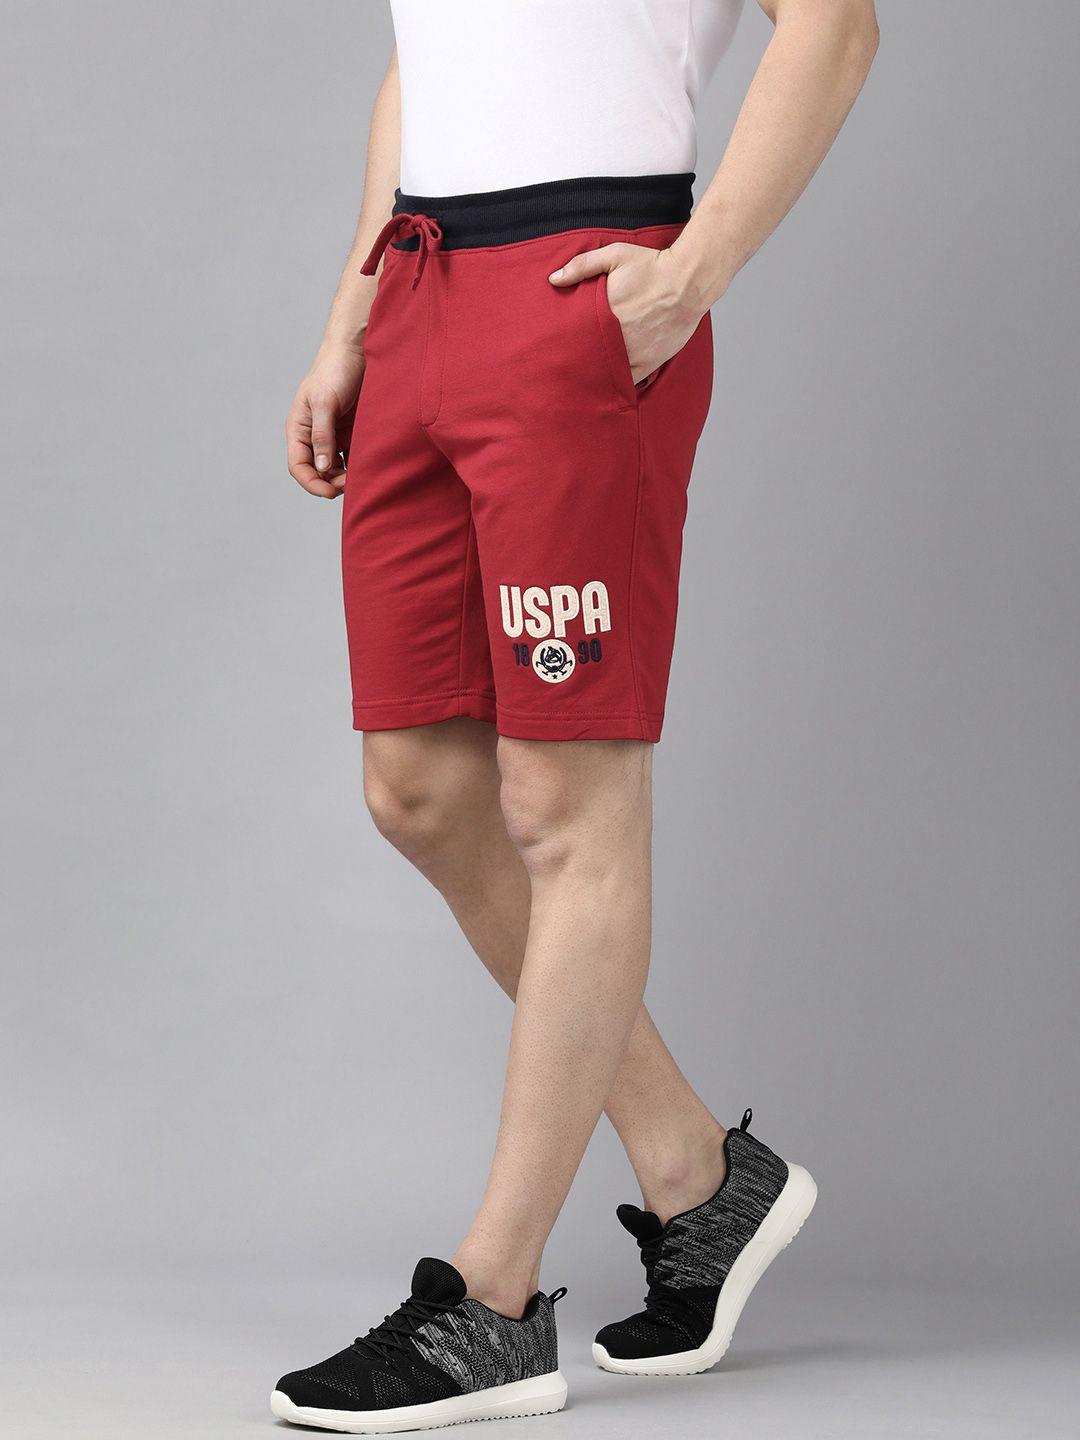 u s polo assn denim co men red & white printed slim fit shorts